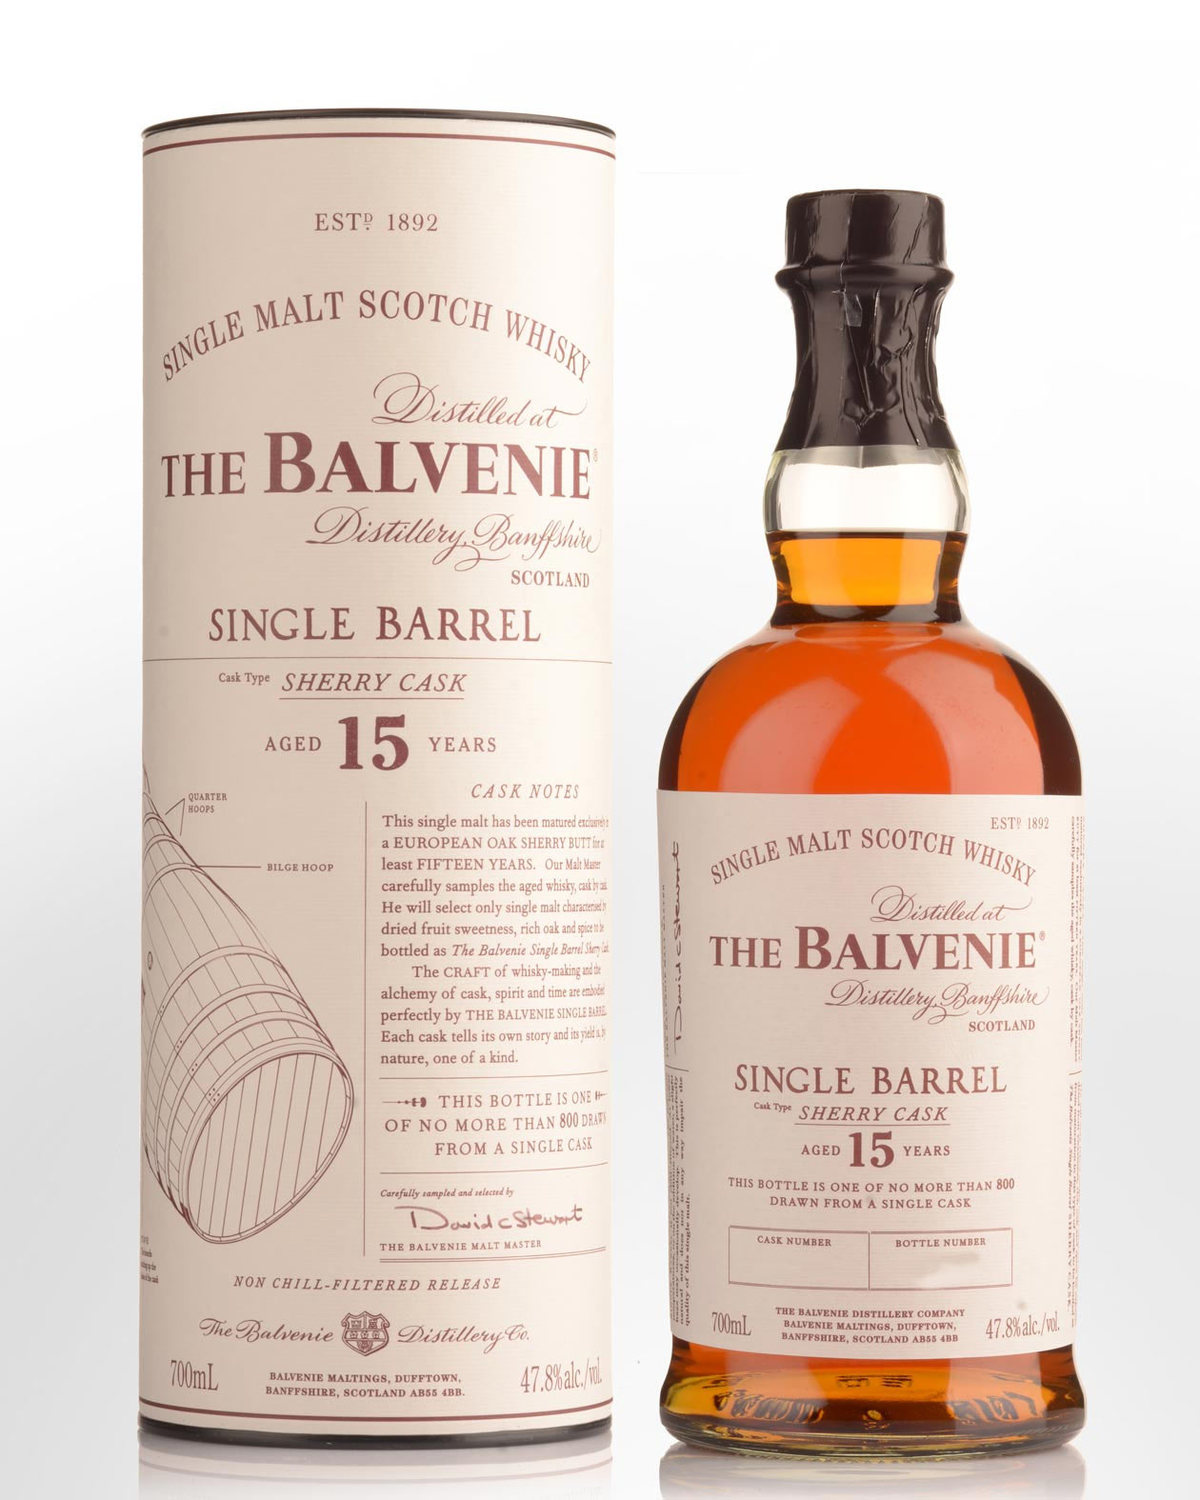 Balvenie 15 Years Old Single Barrel Cask 9018 1995; Buy, 52% OFF